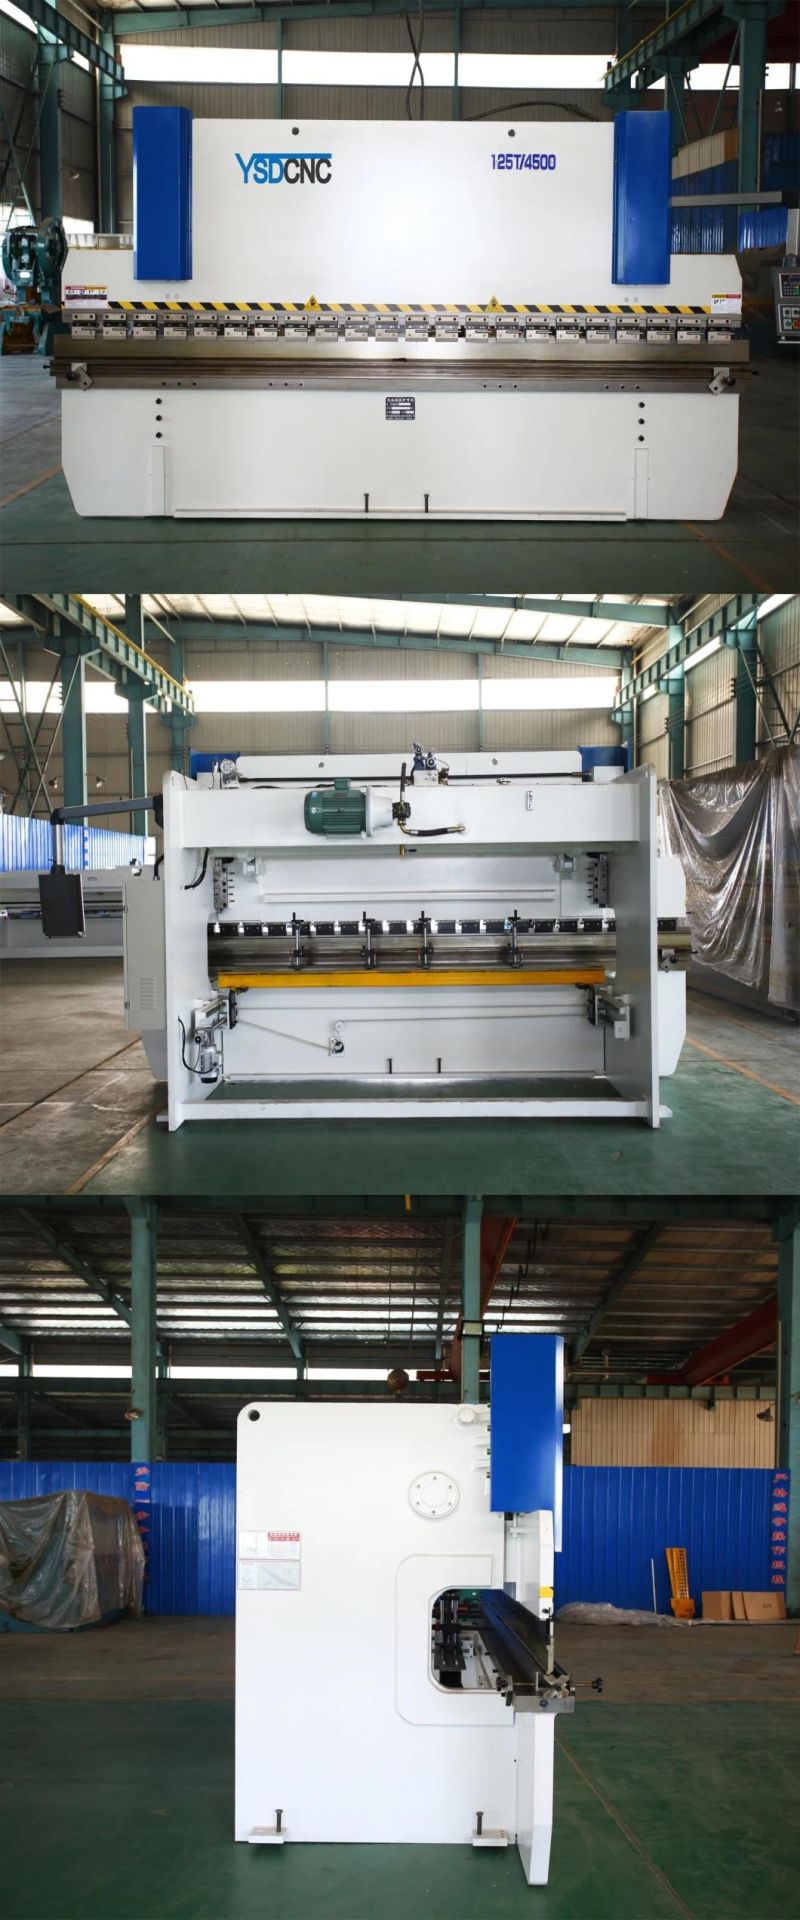 PBT CNC Hydraulic Press Brake Tooling Machine with Cybtouch 6